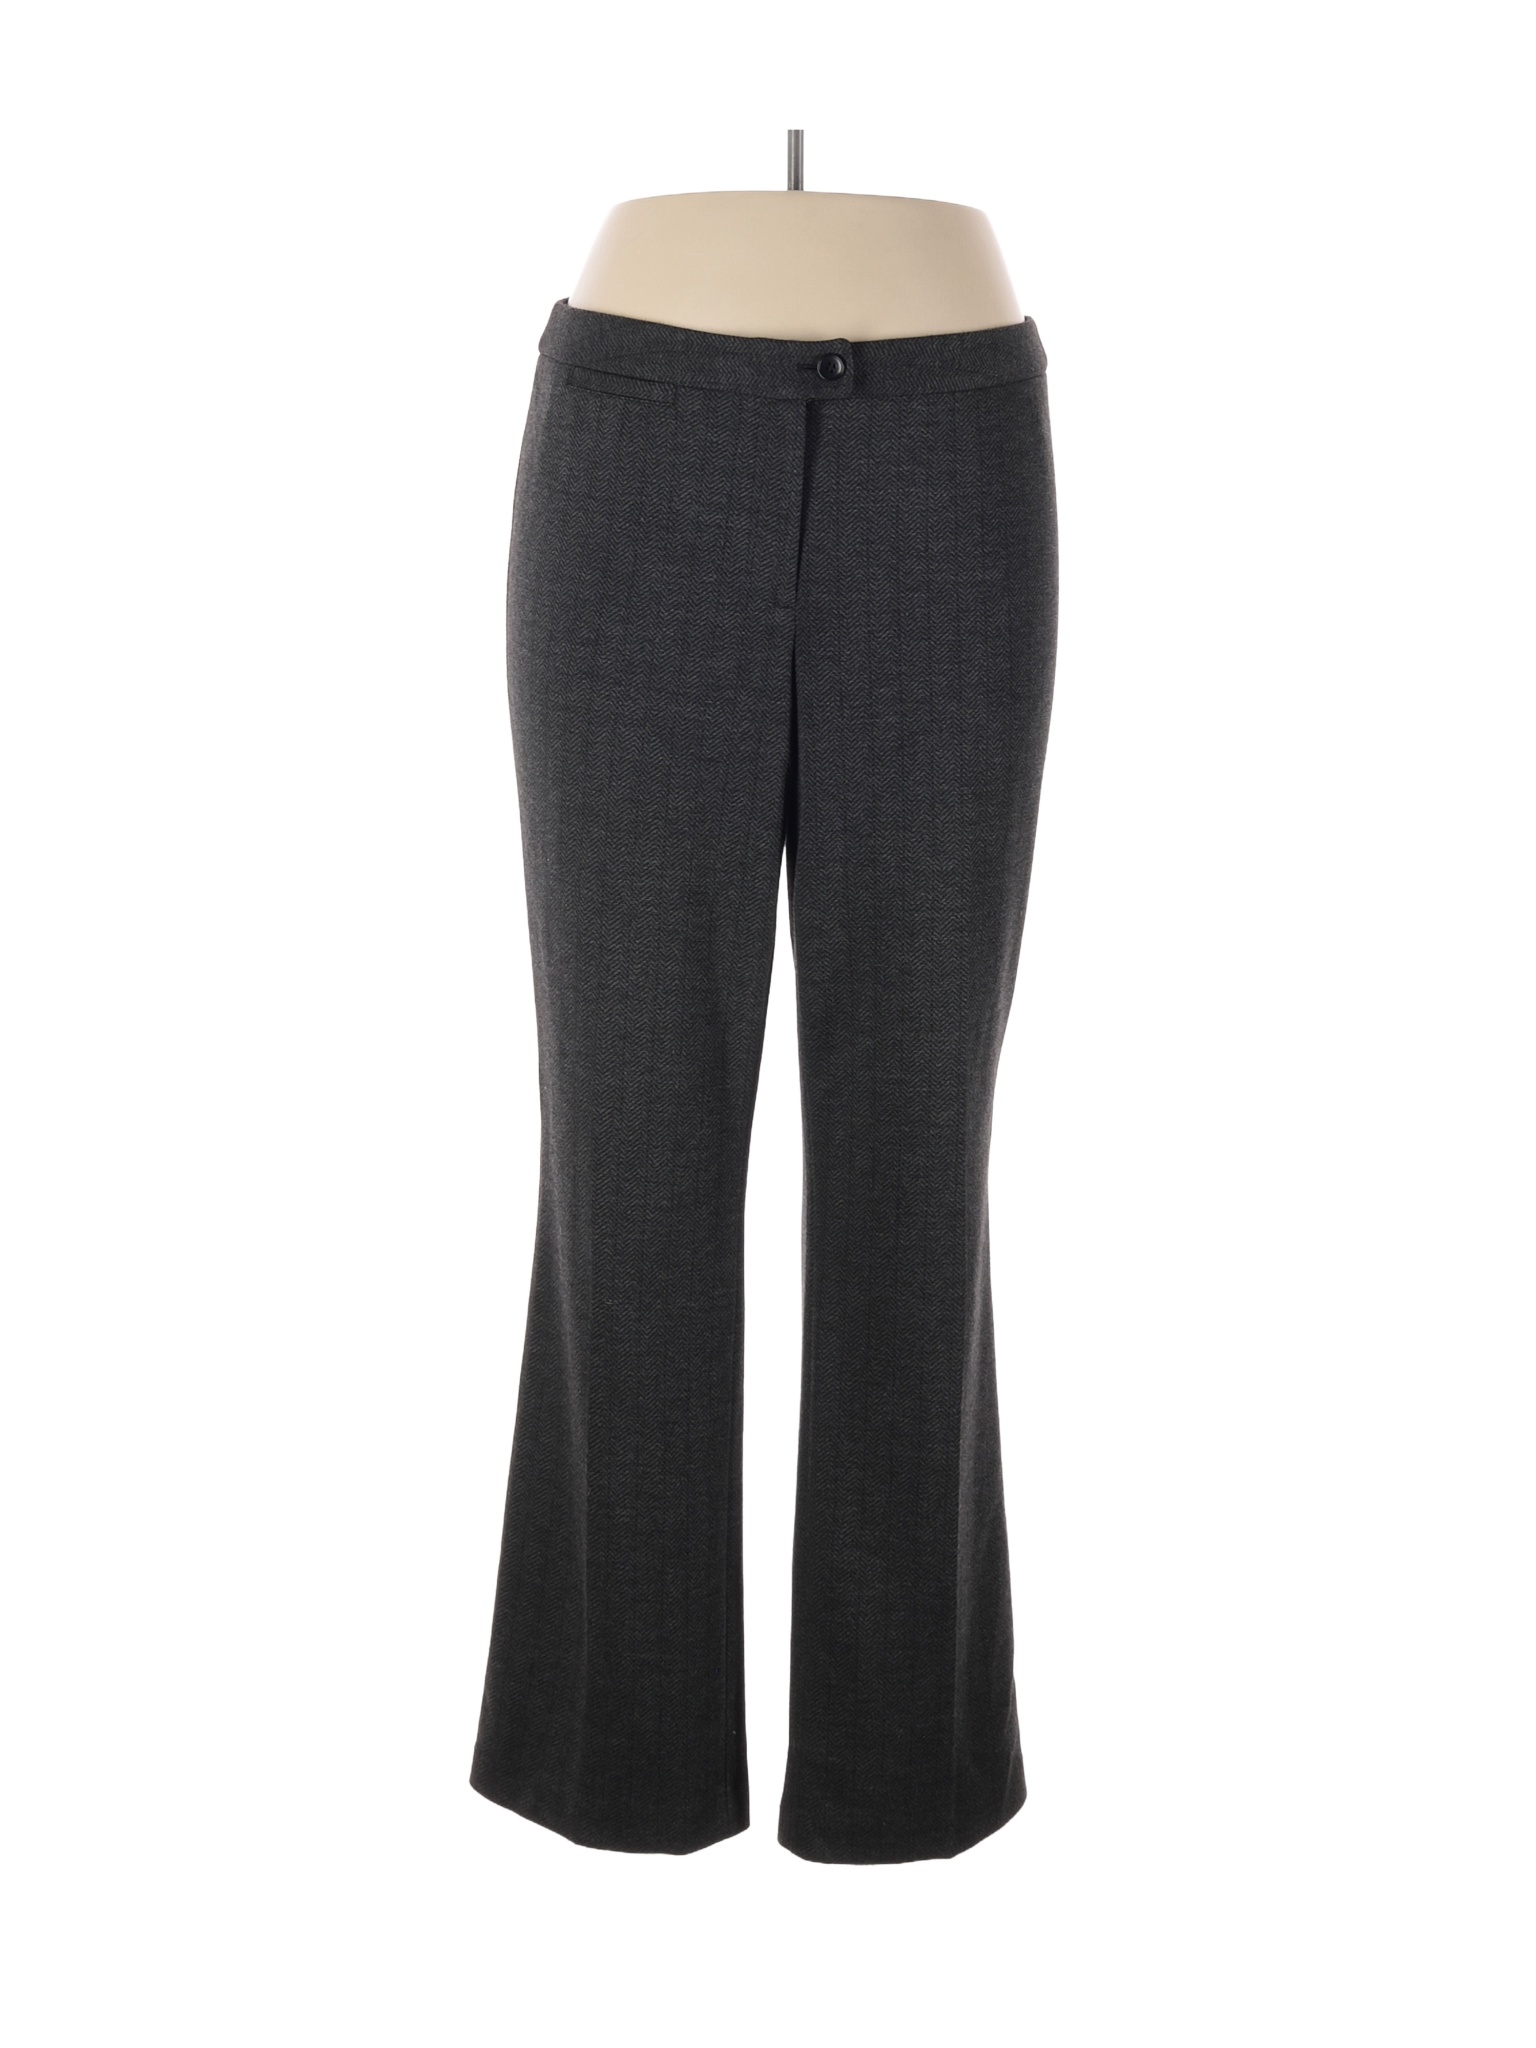 Talbots Gray Dress Pants Size 14 - 85% off | thredUP